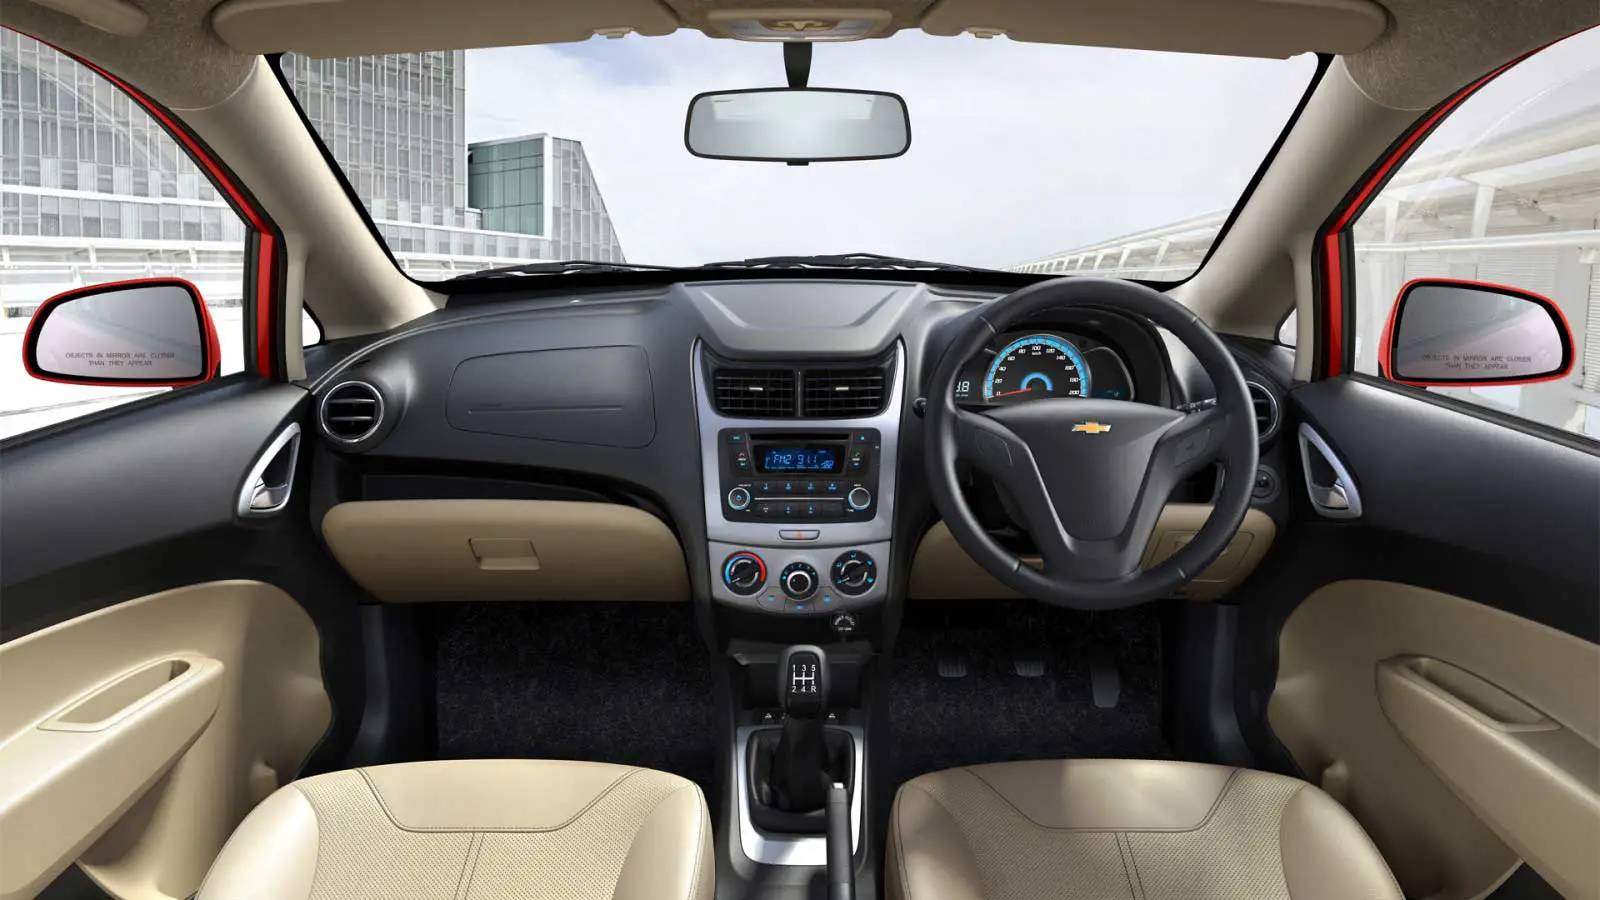 Chevrolet Sail Hatchback 1.2 LT ABS Interior front view